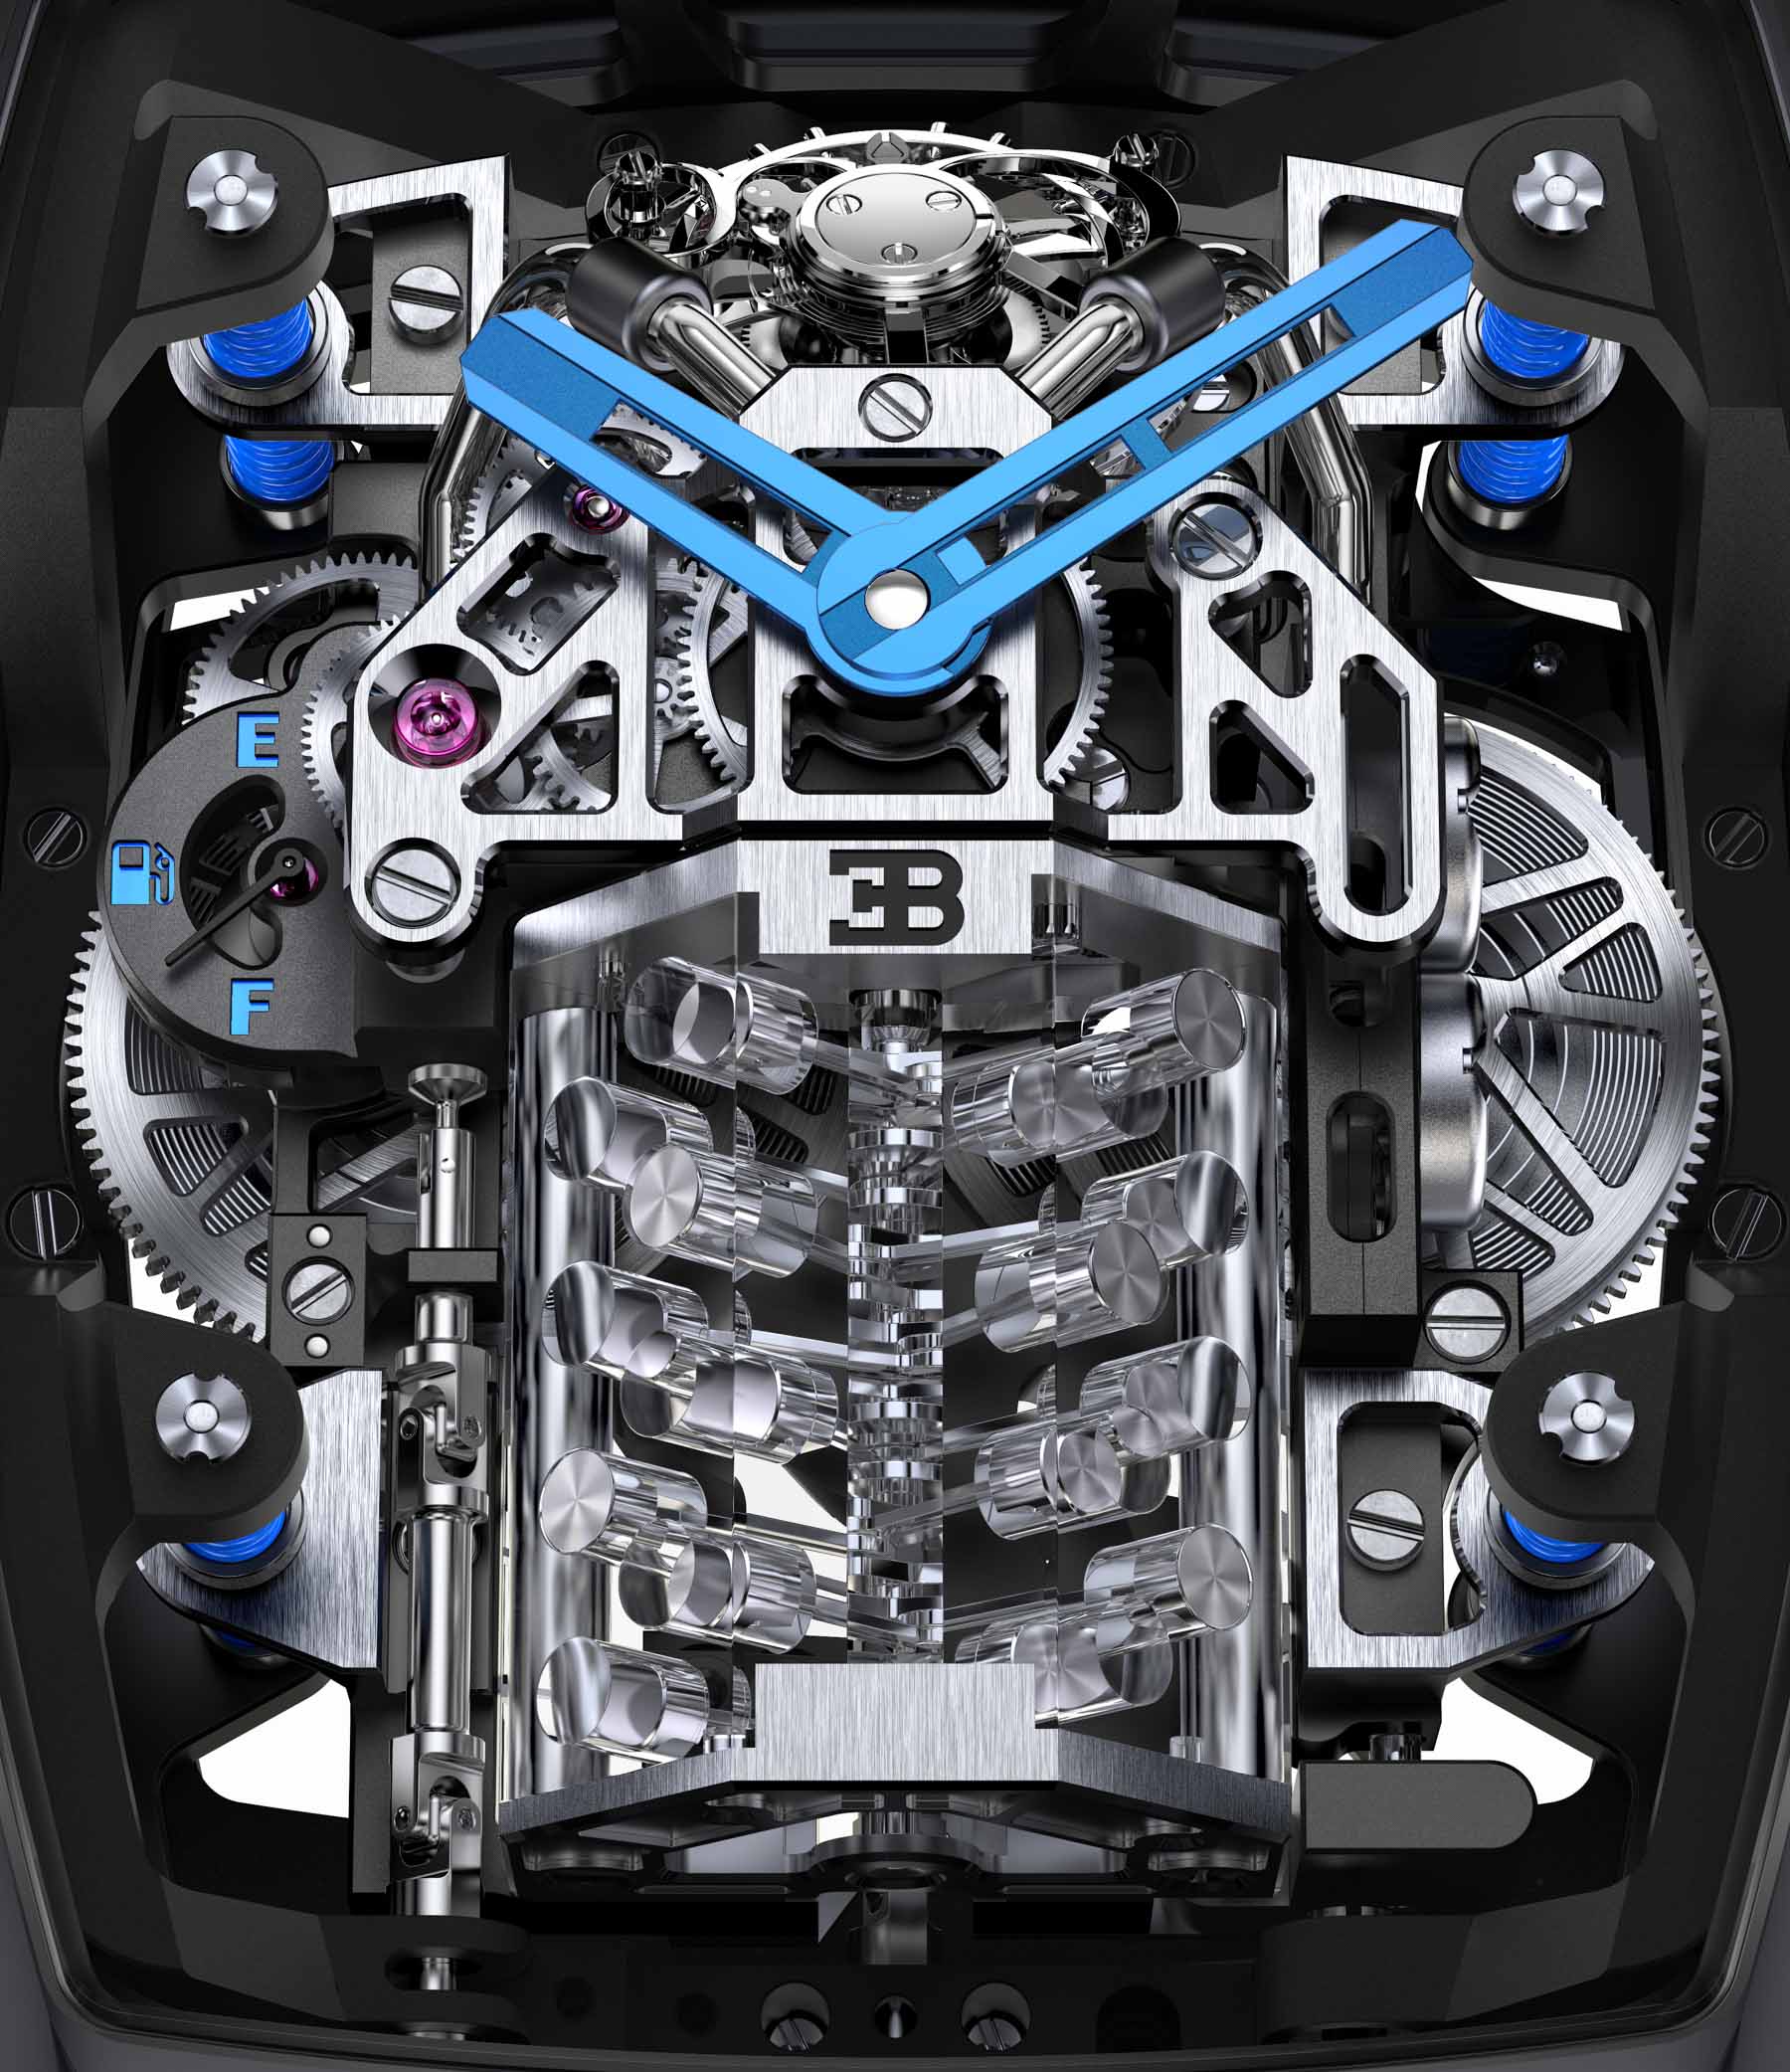 Jacob Co Bugatti Chiron Tourbillon Watch W16 Engine Automaton Cars Automobiles Sapphire Tourbillon Engineering Watchmaking Innovation aBlogtoWatch 6